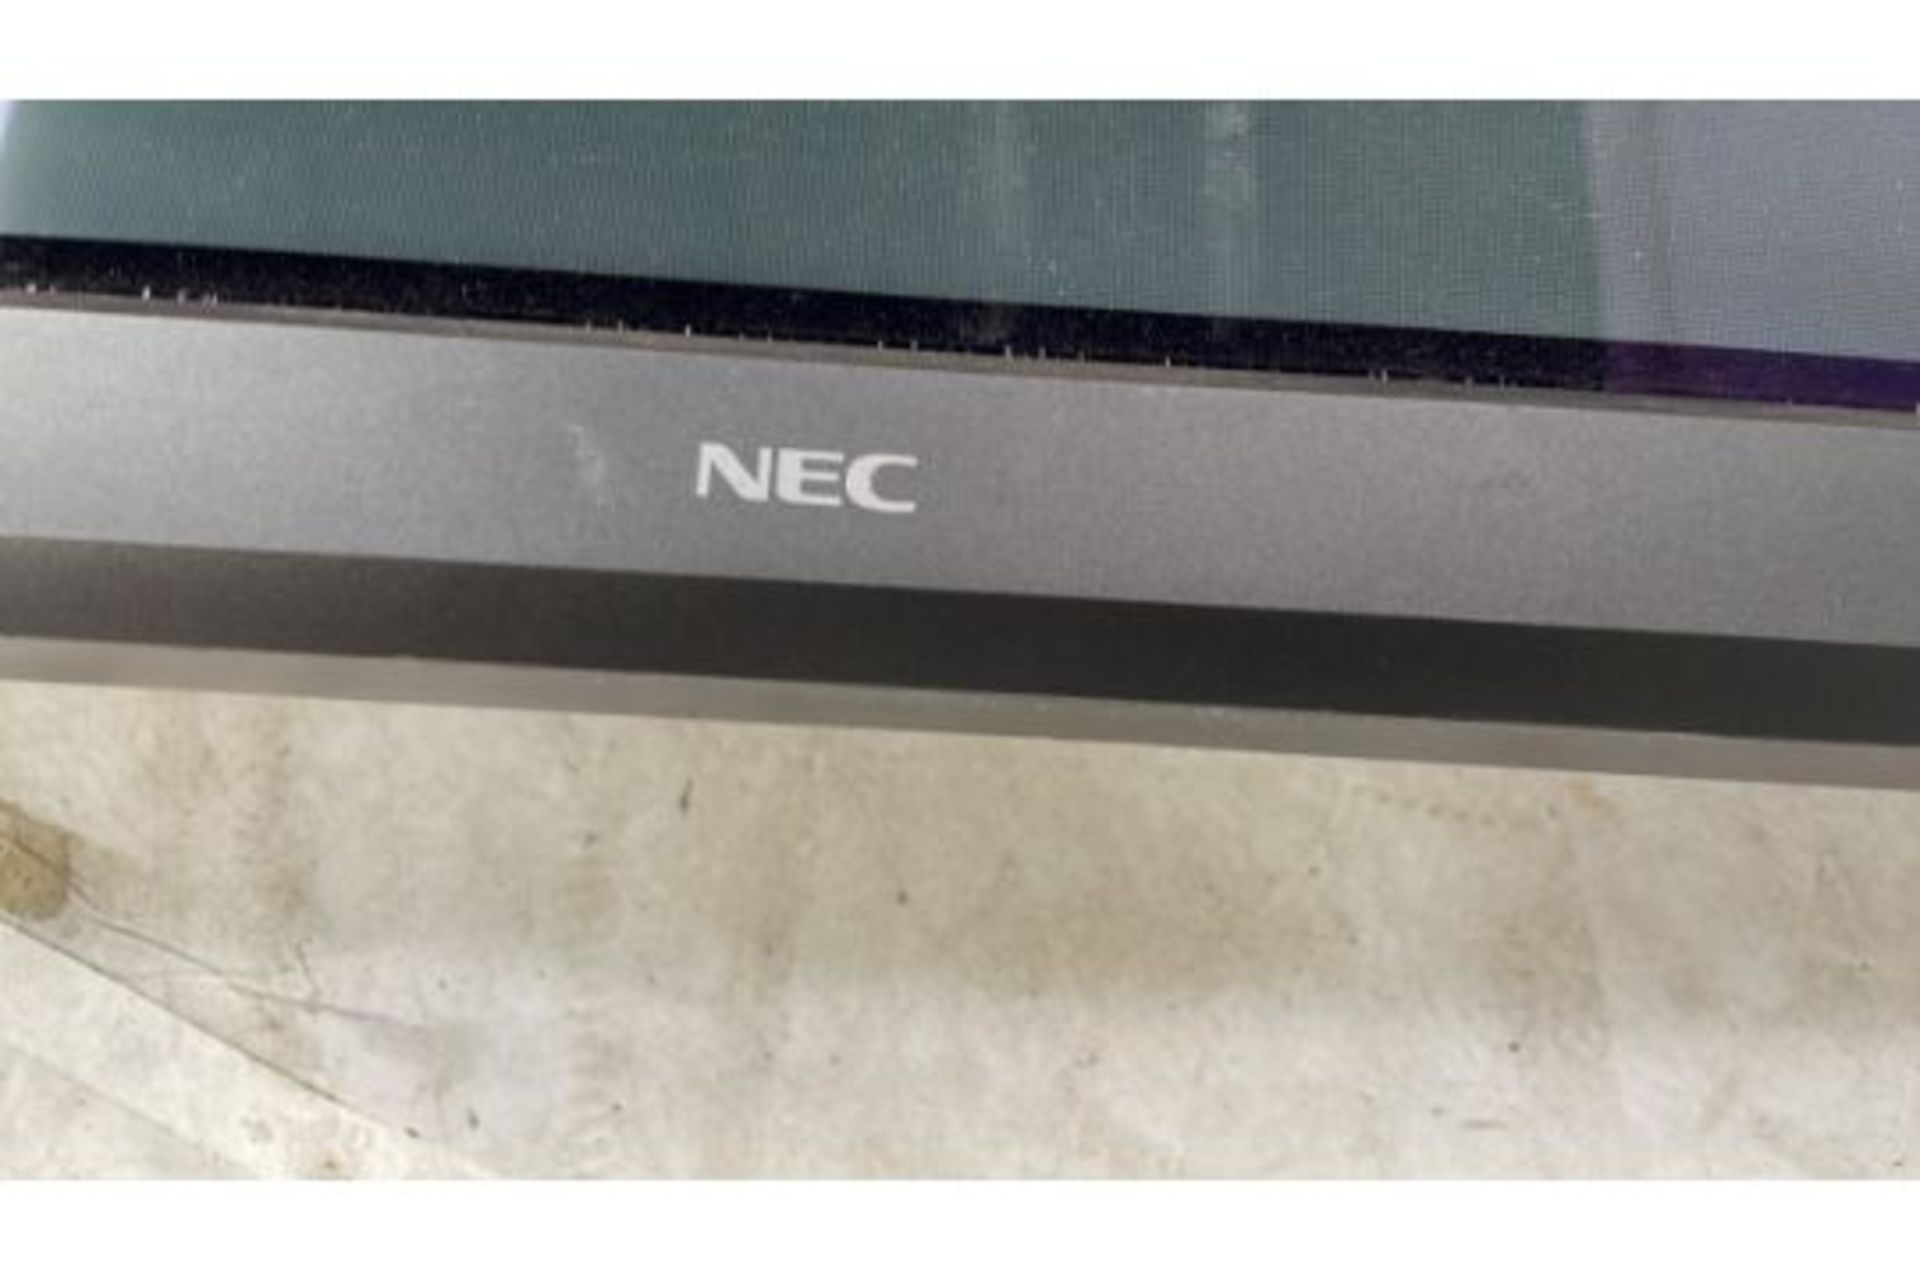 NEC Smart TV - Image 2 of 3